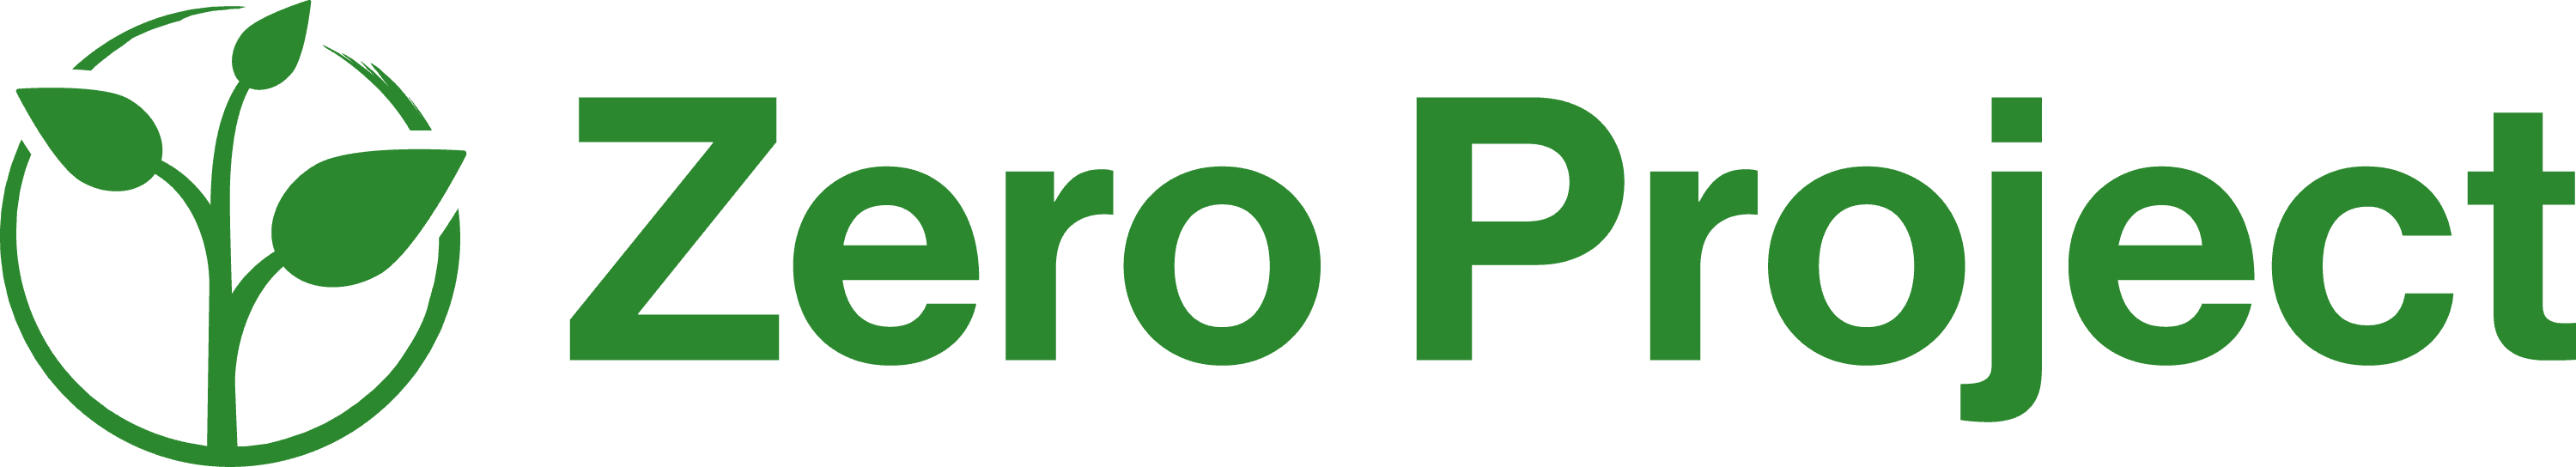 Zero project logo